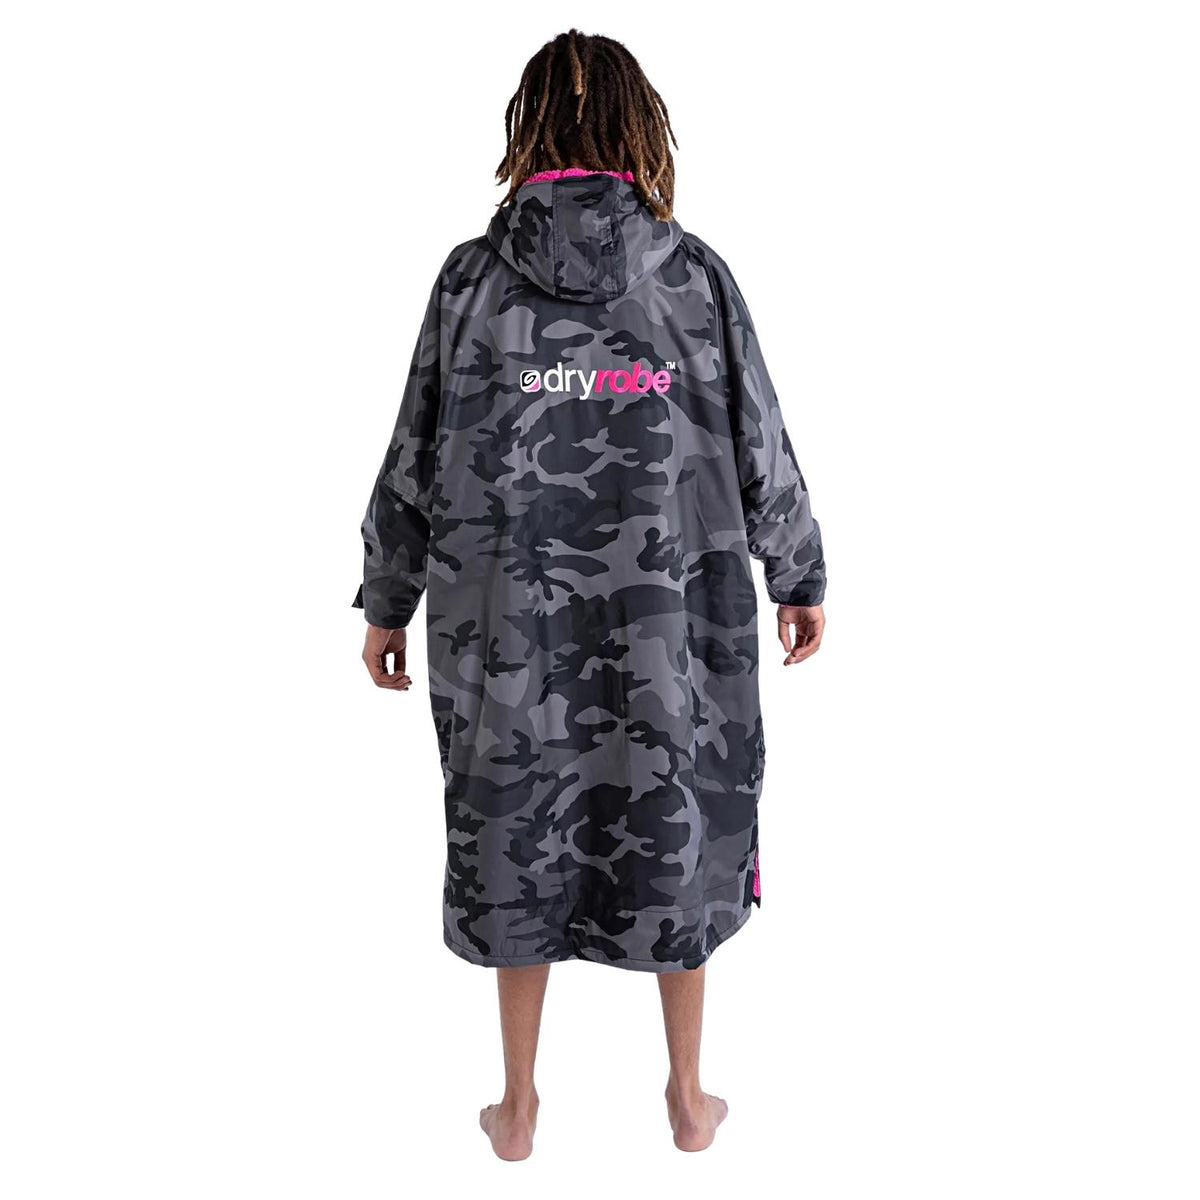 Dryrobe Advance Long Sleeve Drying &amp; Changing Robe - Black Camo/Pink - Changing Robe Poncho Towel by Dryrobe